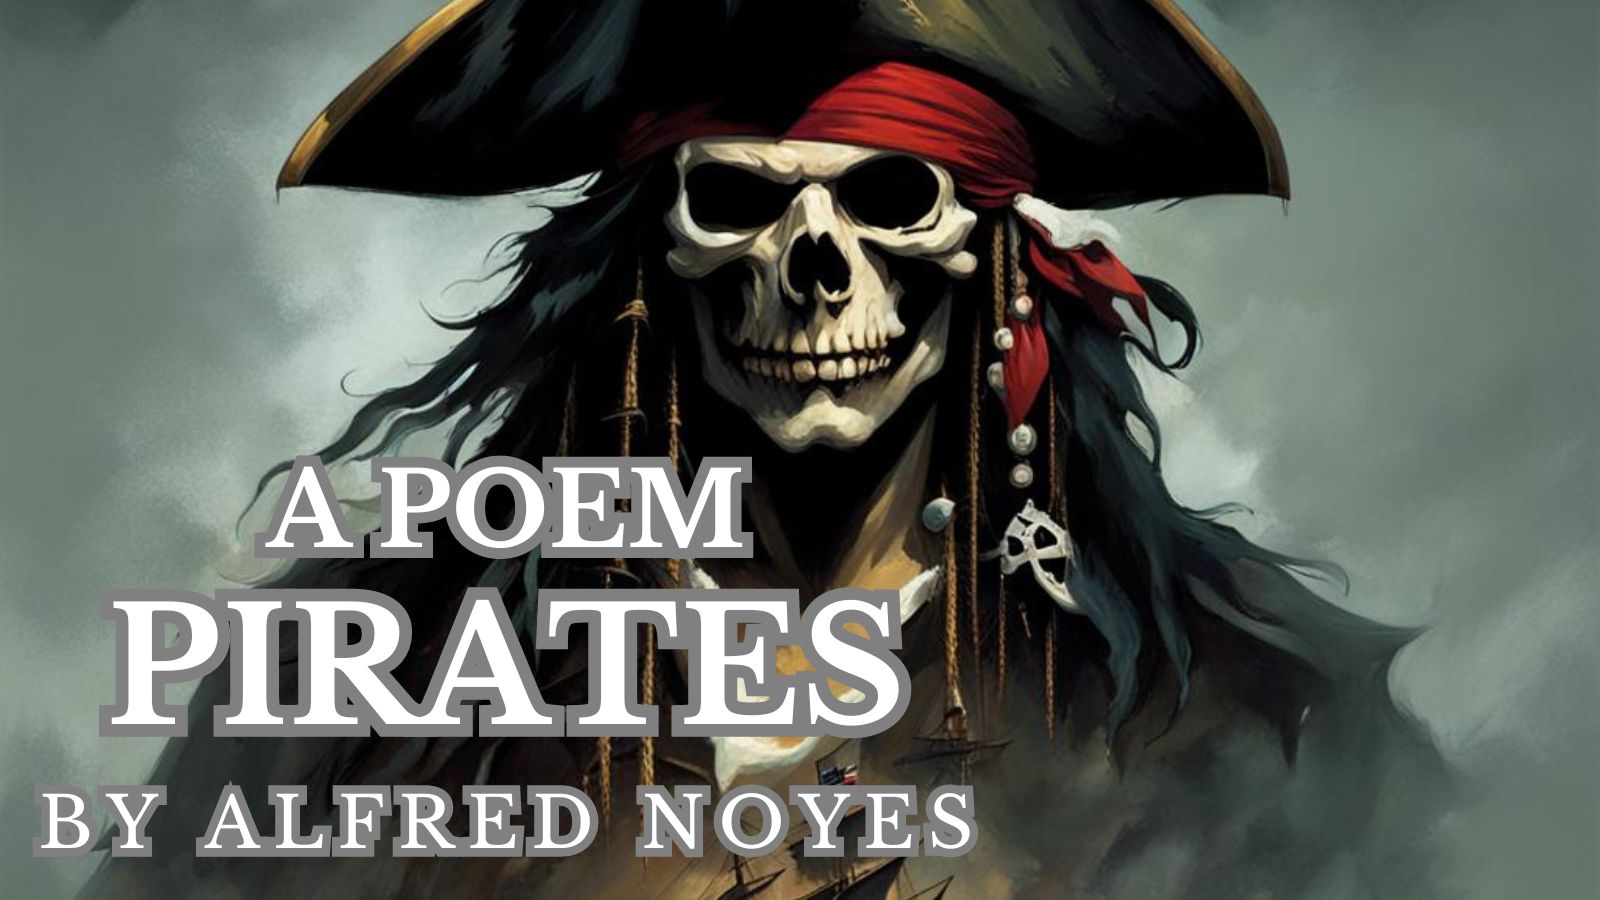 Pirates by Alfred Noyes